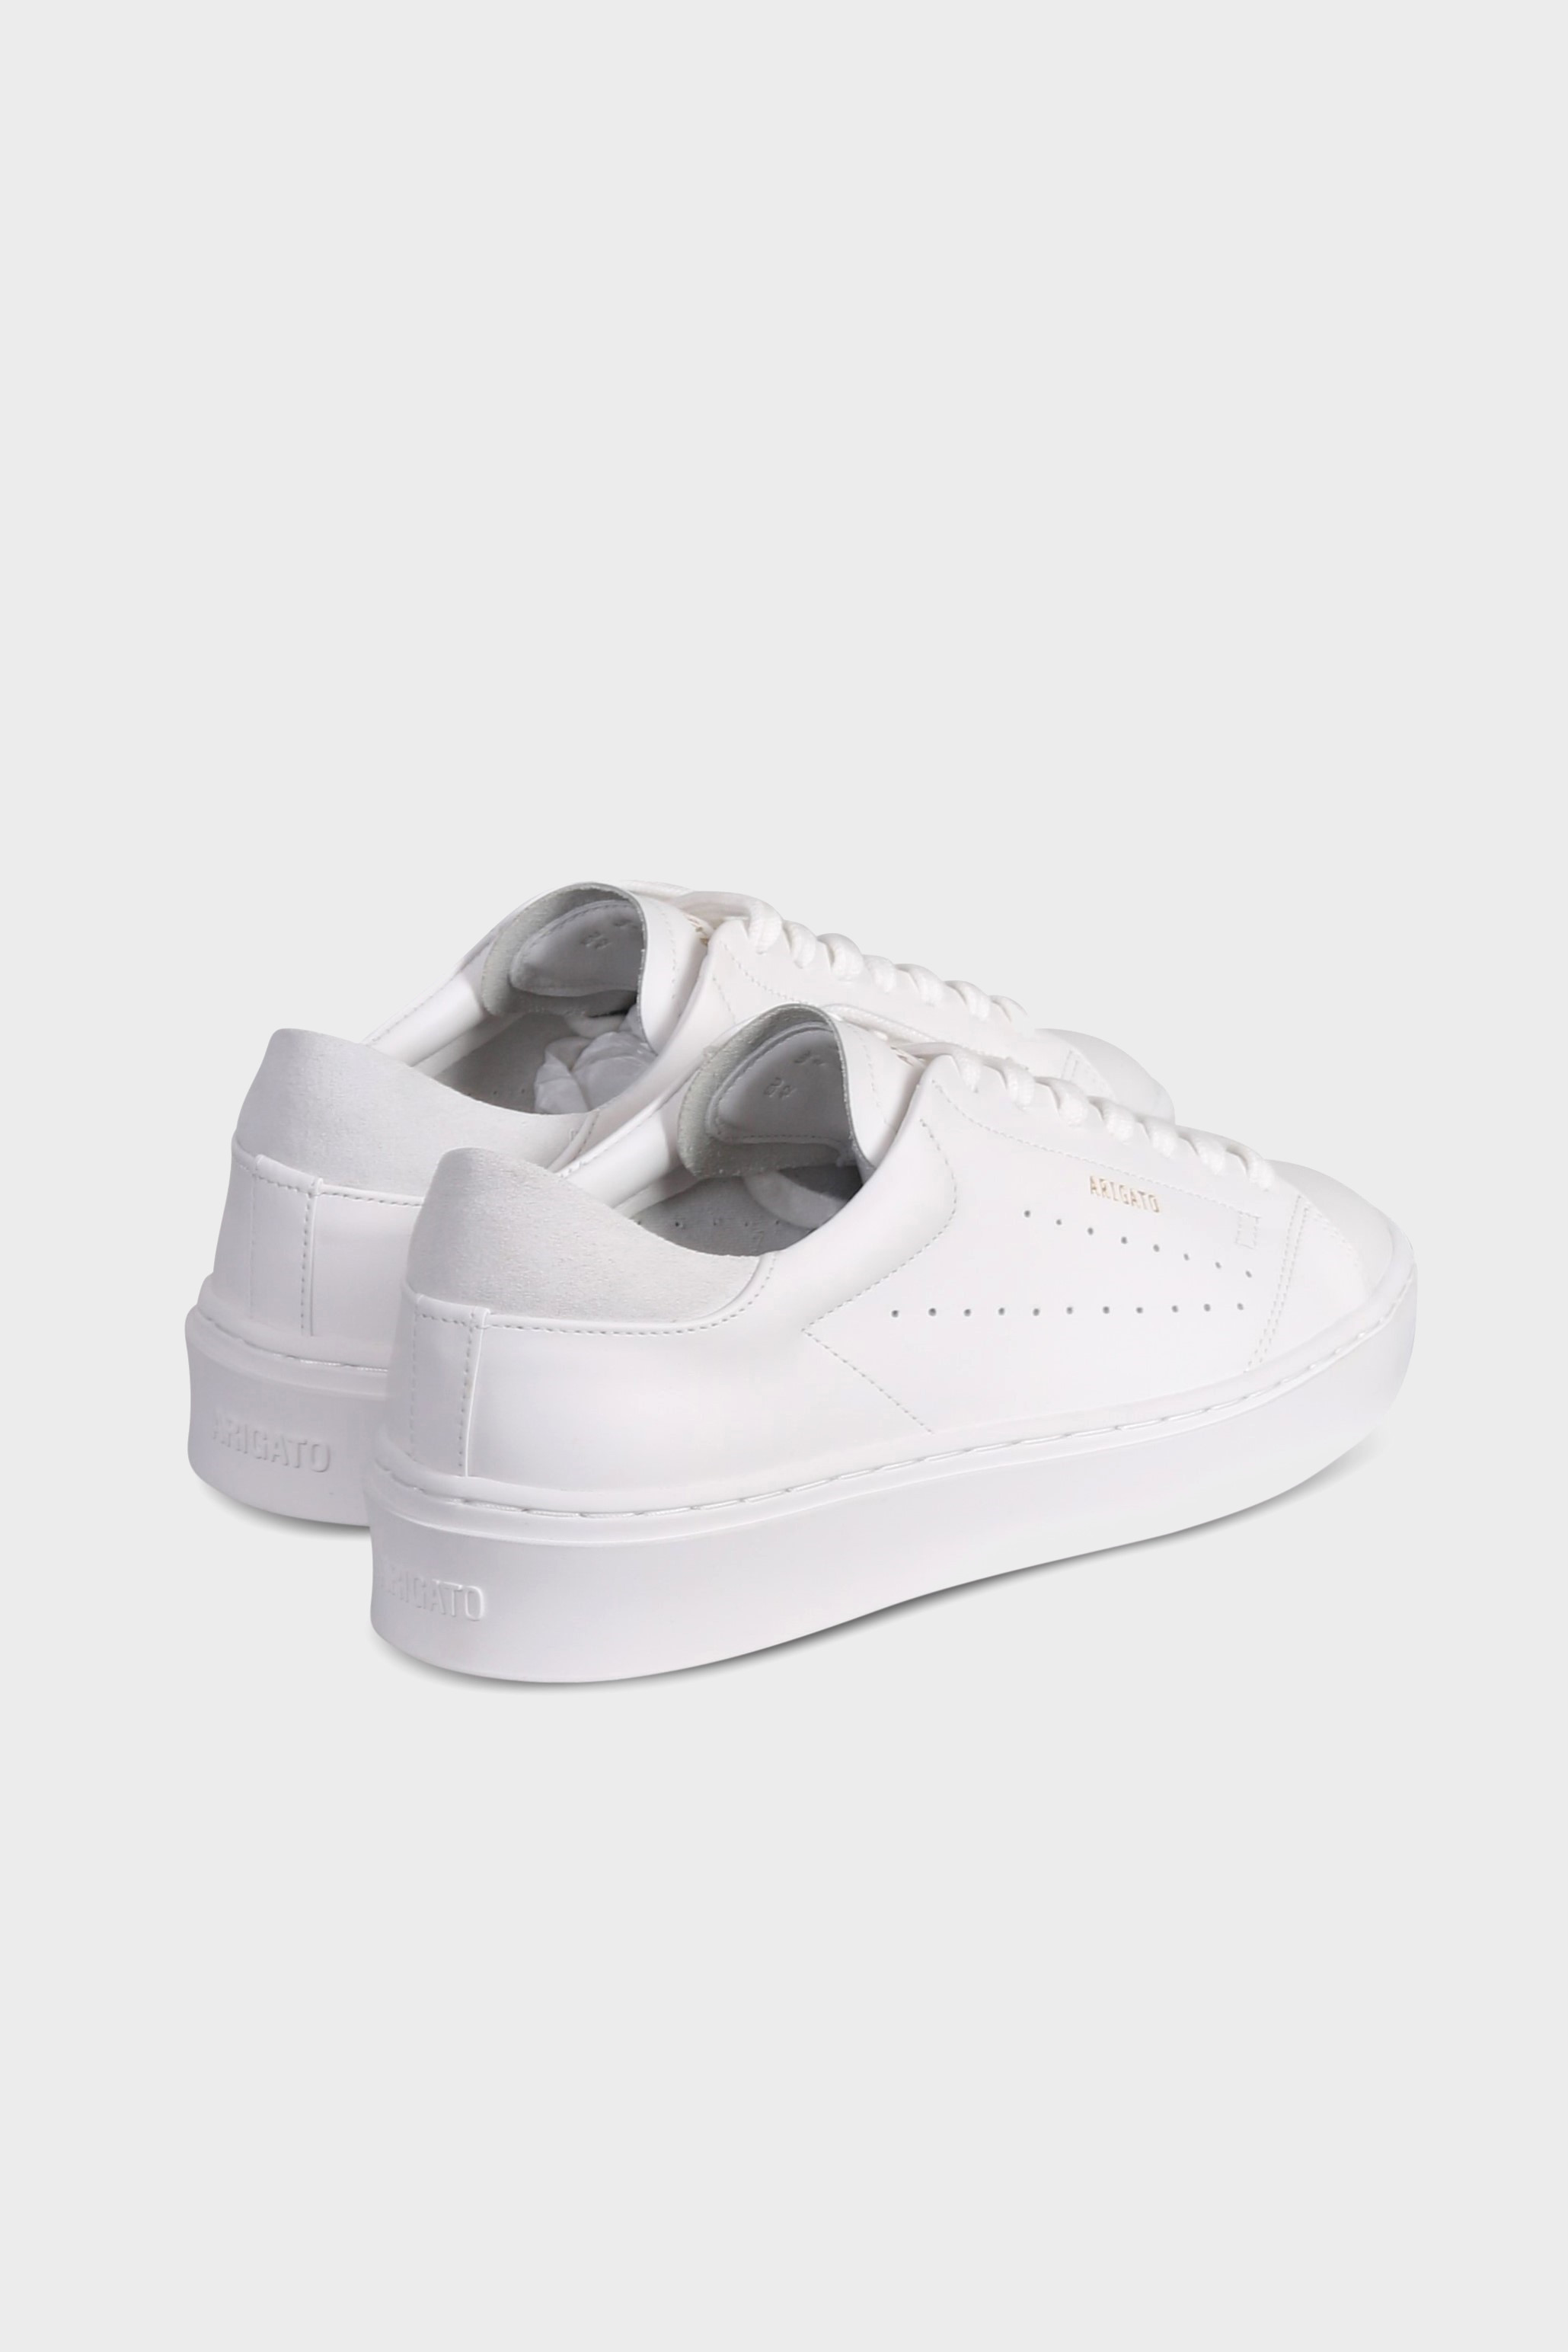 AXEL ARIGATO Court Sneaker in White/Light Grey 47